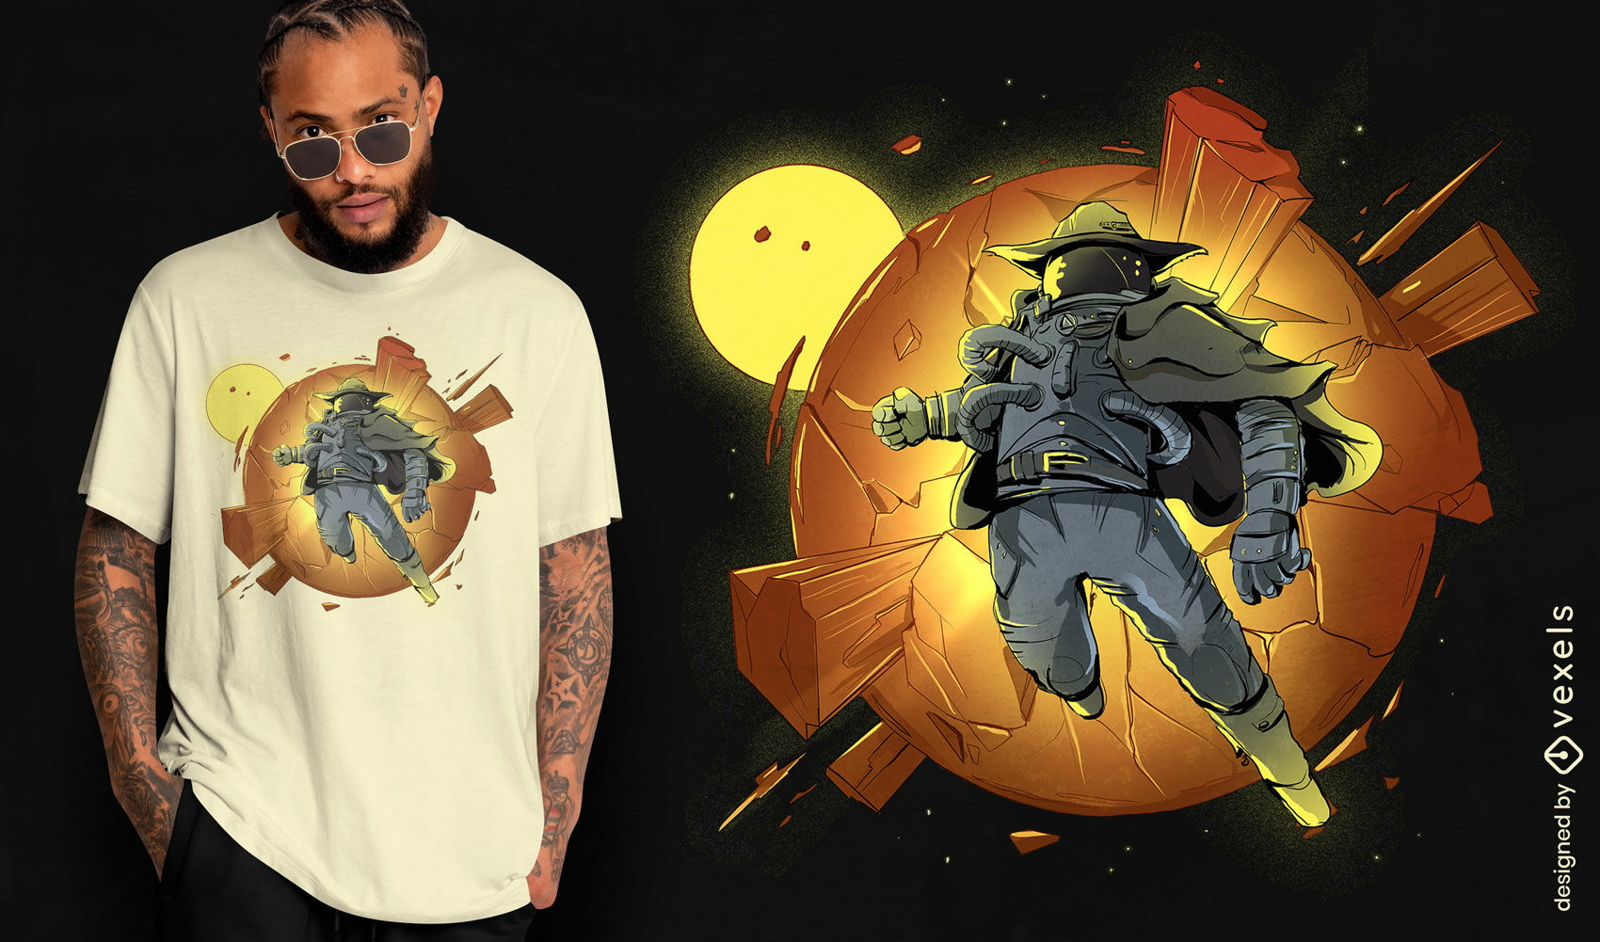 Badass astronaut apocalypse t-shirt design